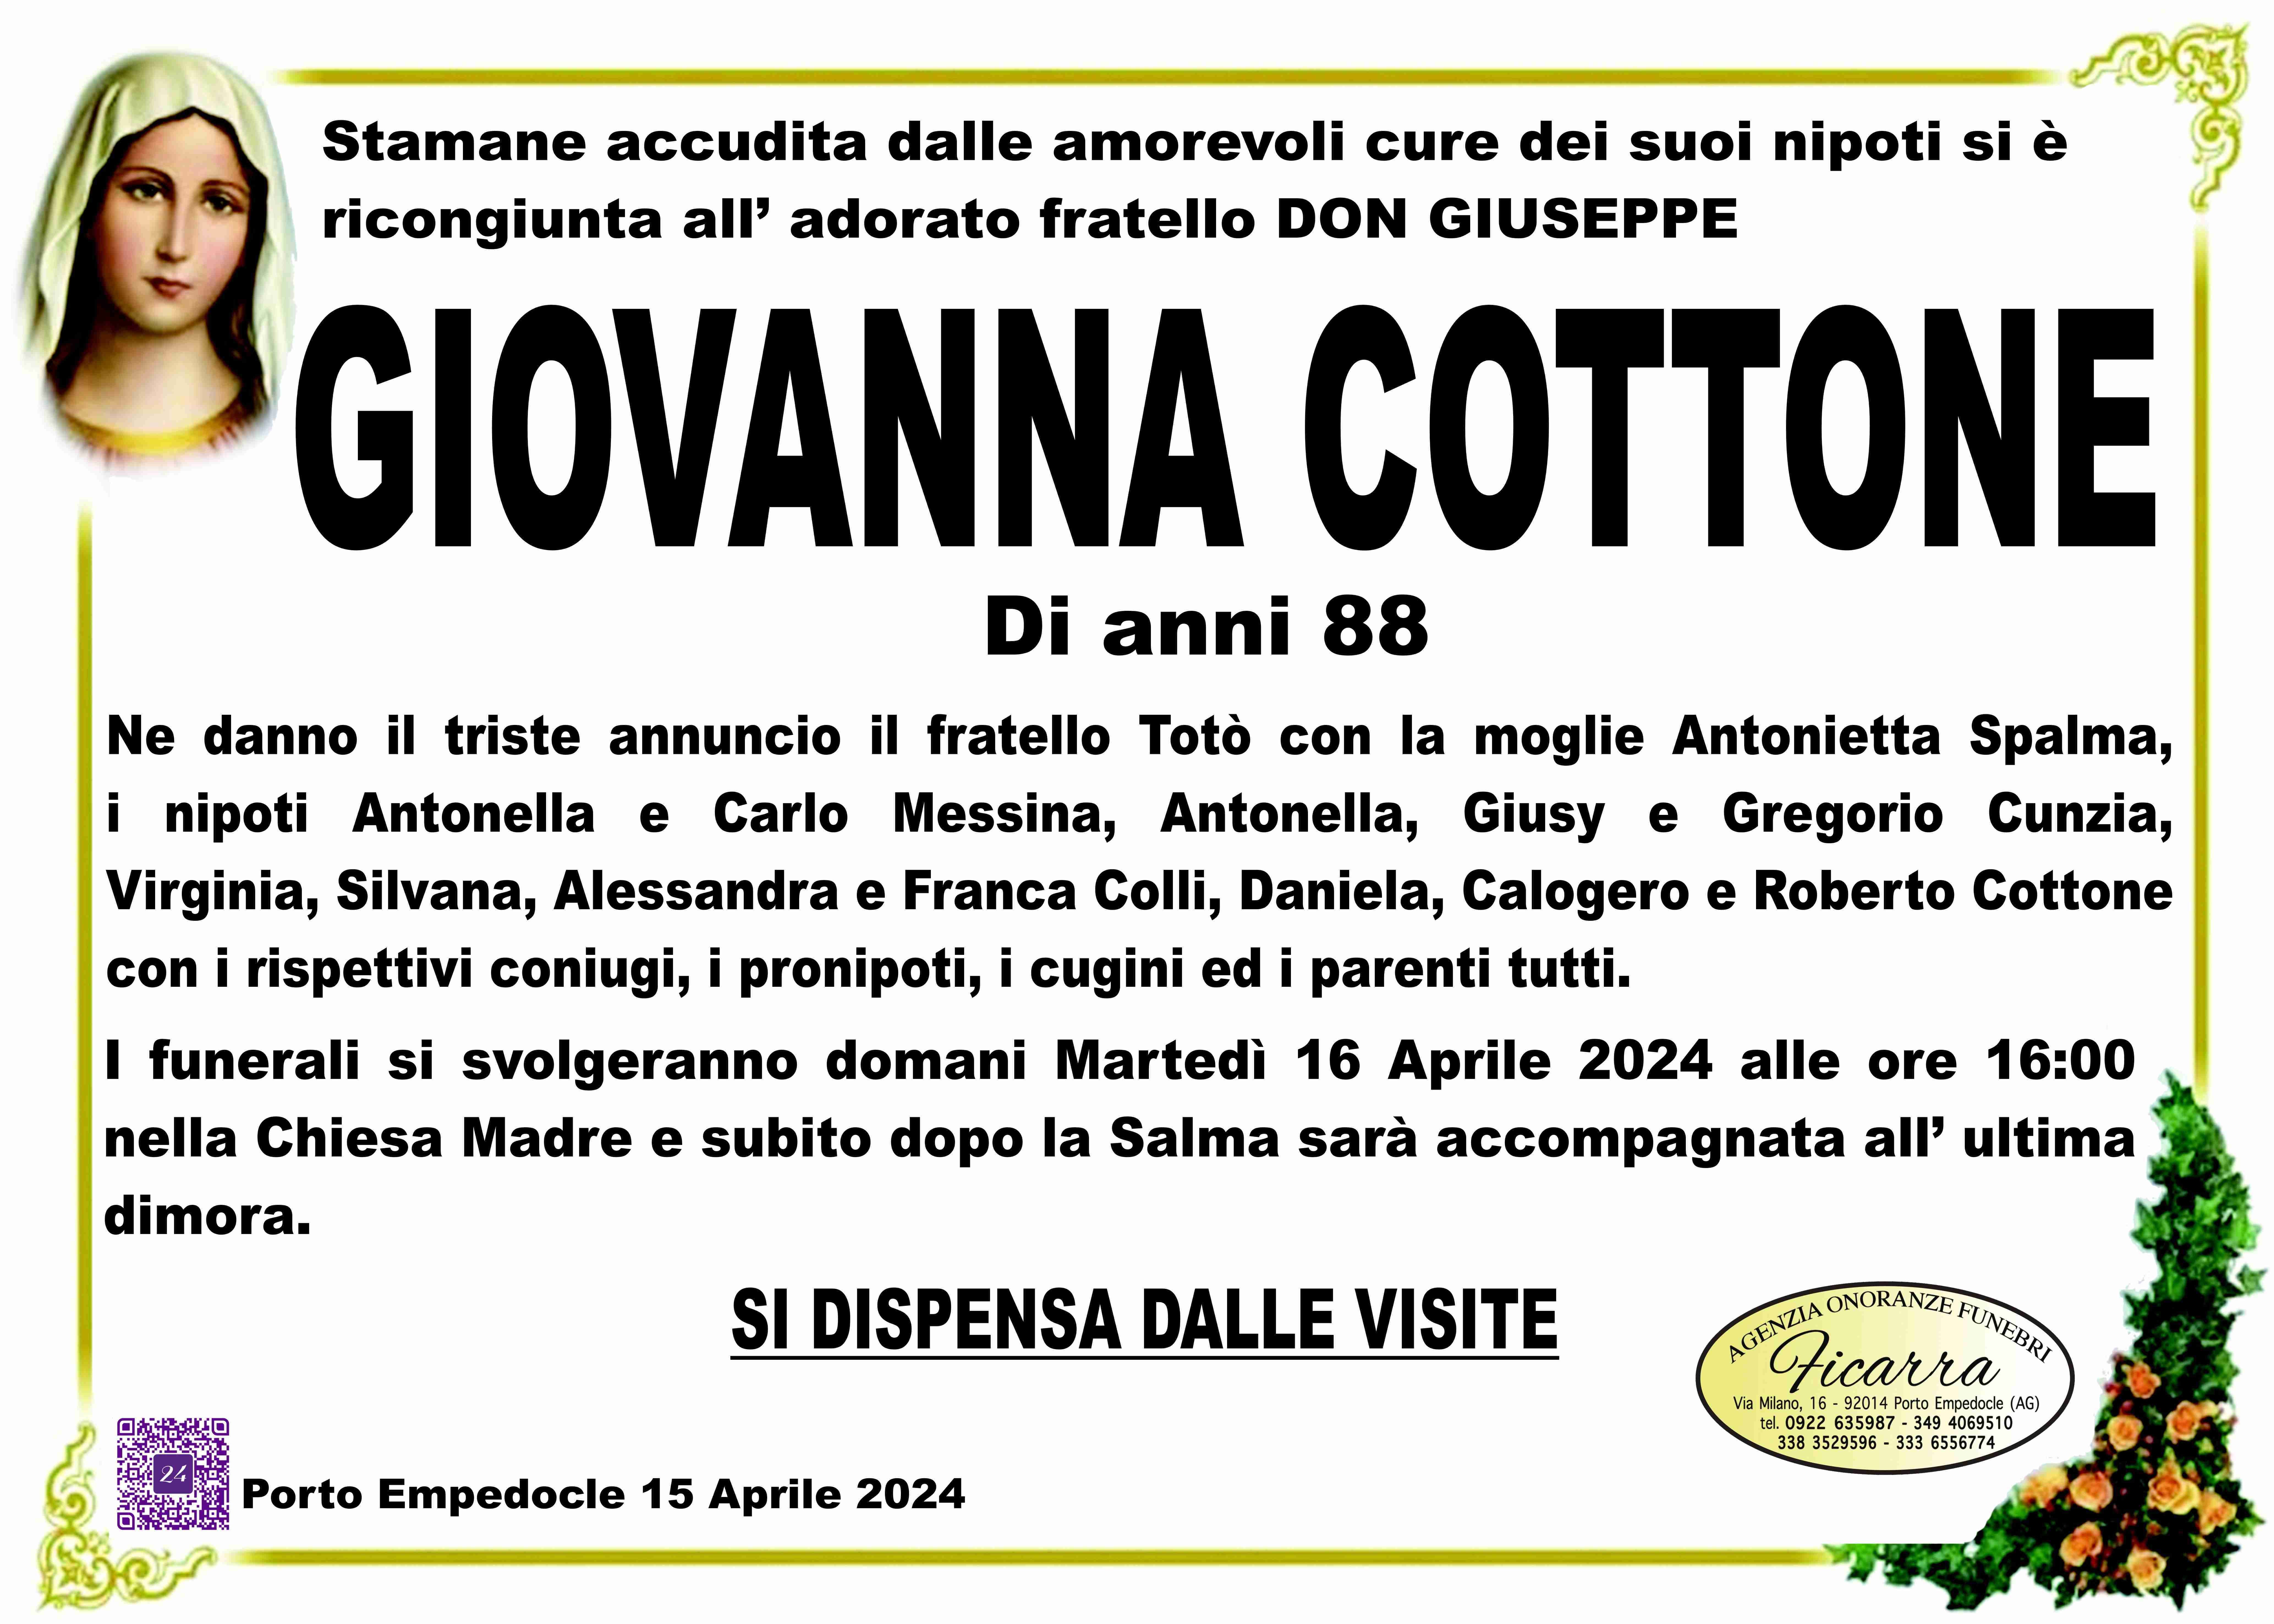 Giovanna Cottone